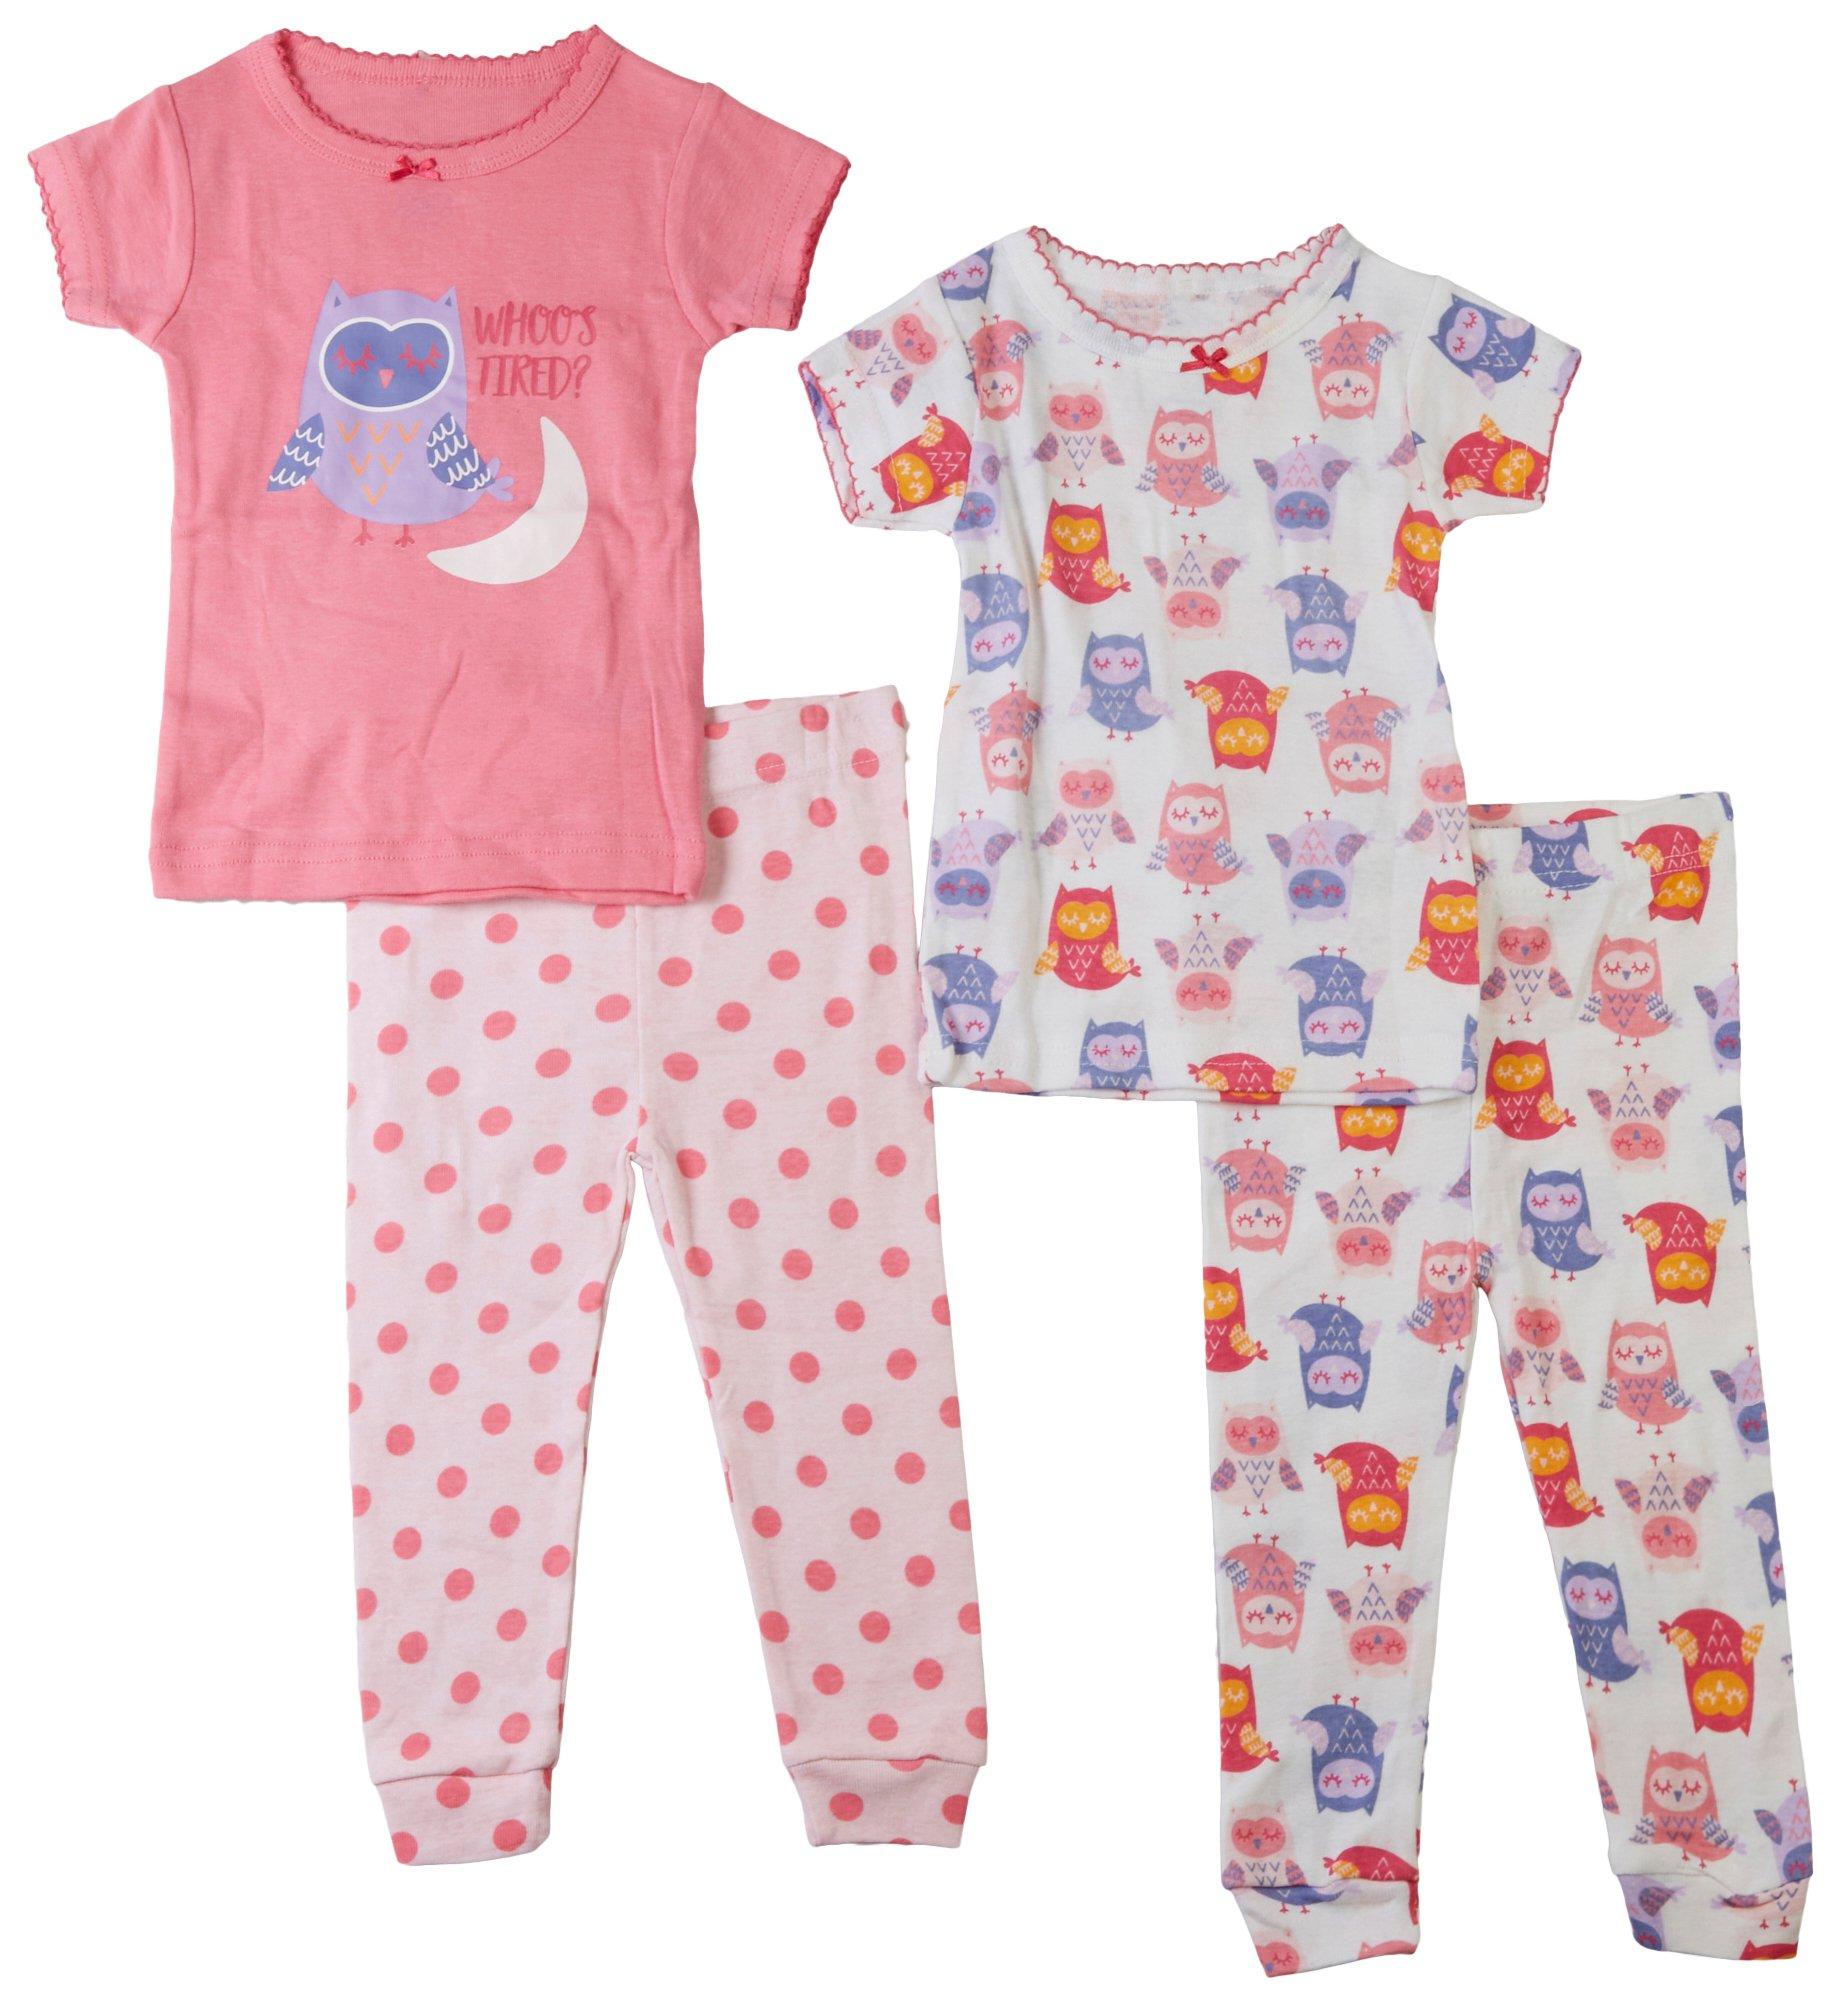 Cutie Pie Baby Baby Girls 4 pc. Whoos Tired Pajama Set